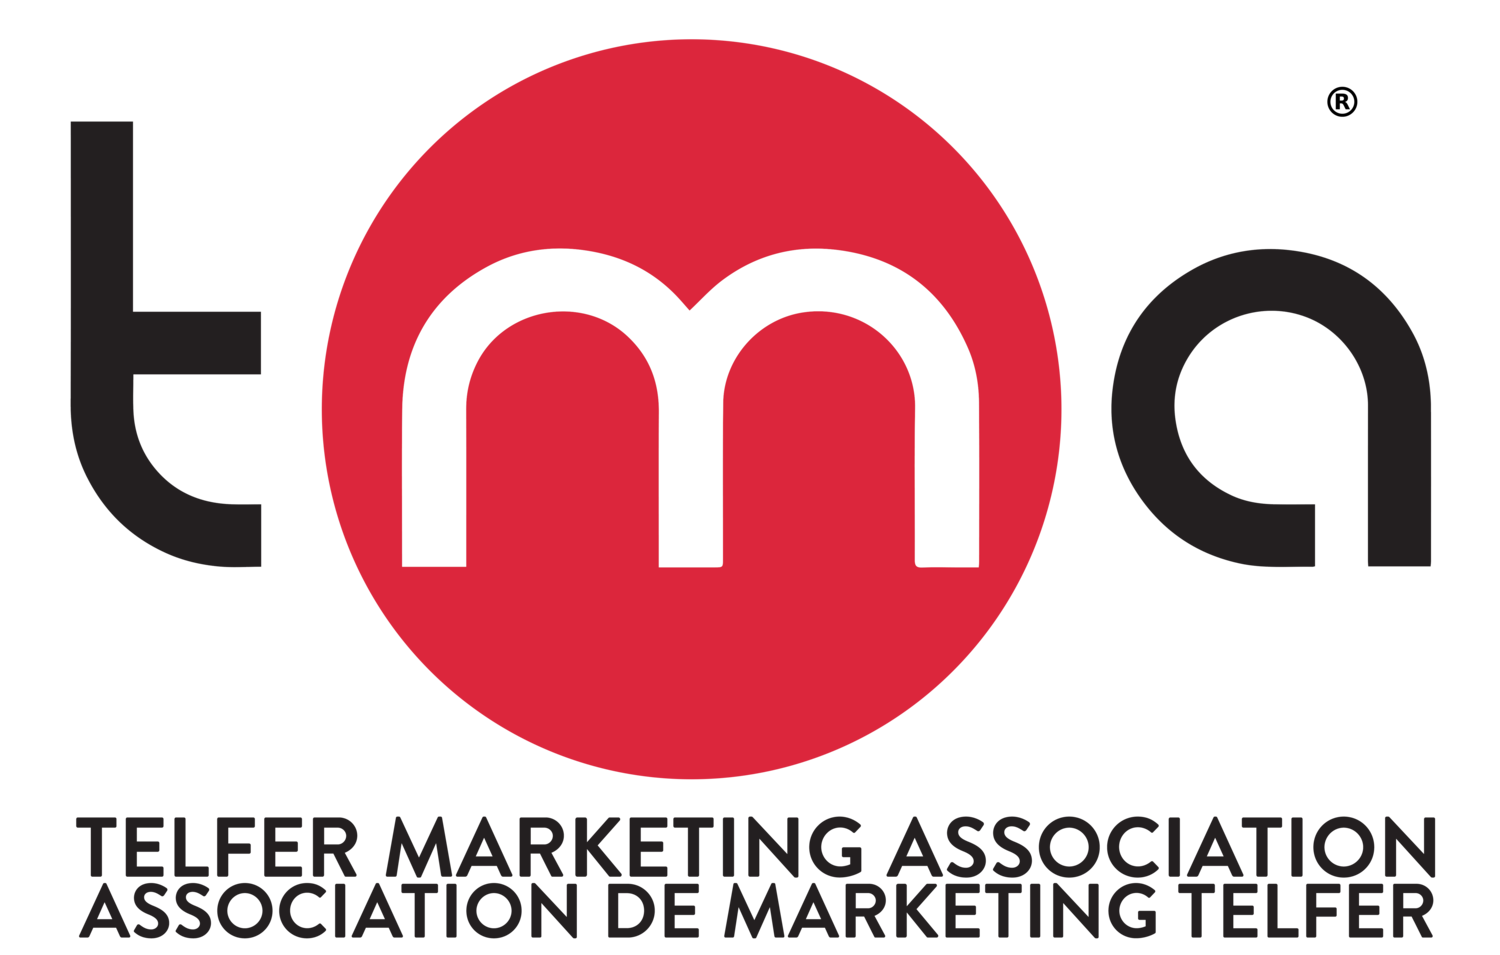 Telfer Marketing Association logo.